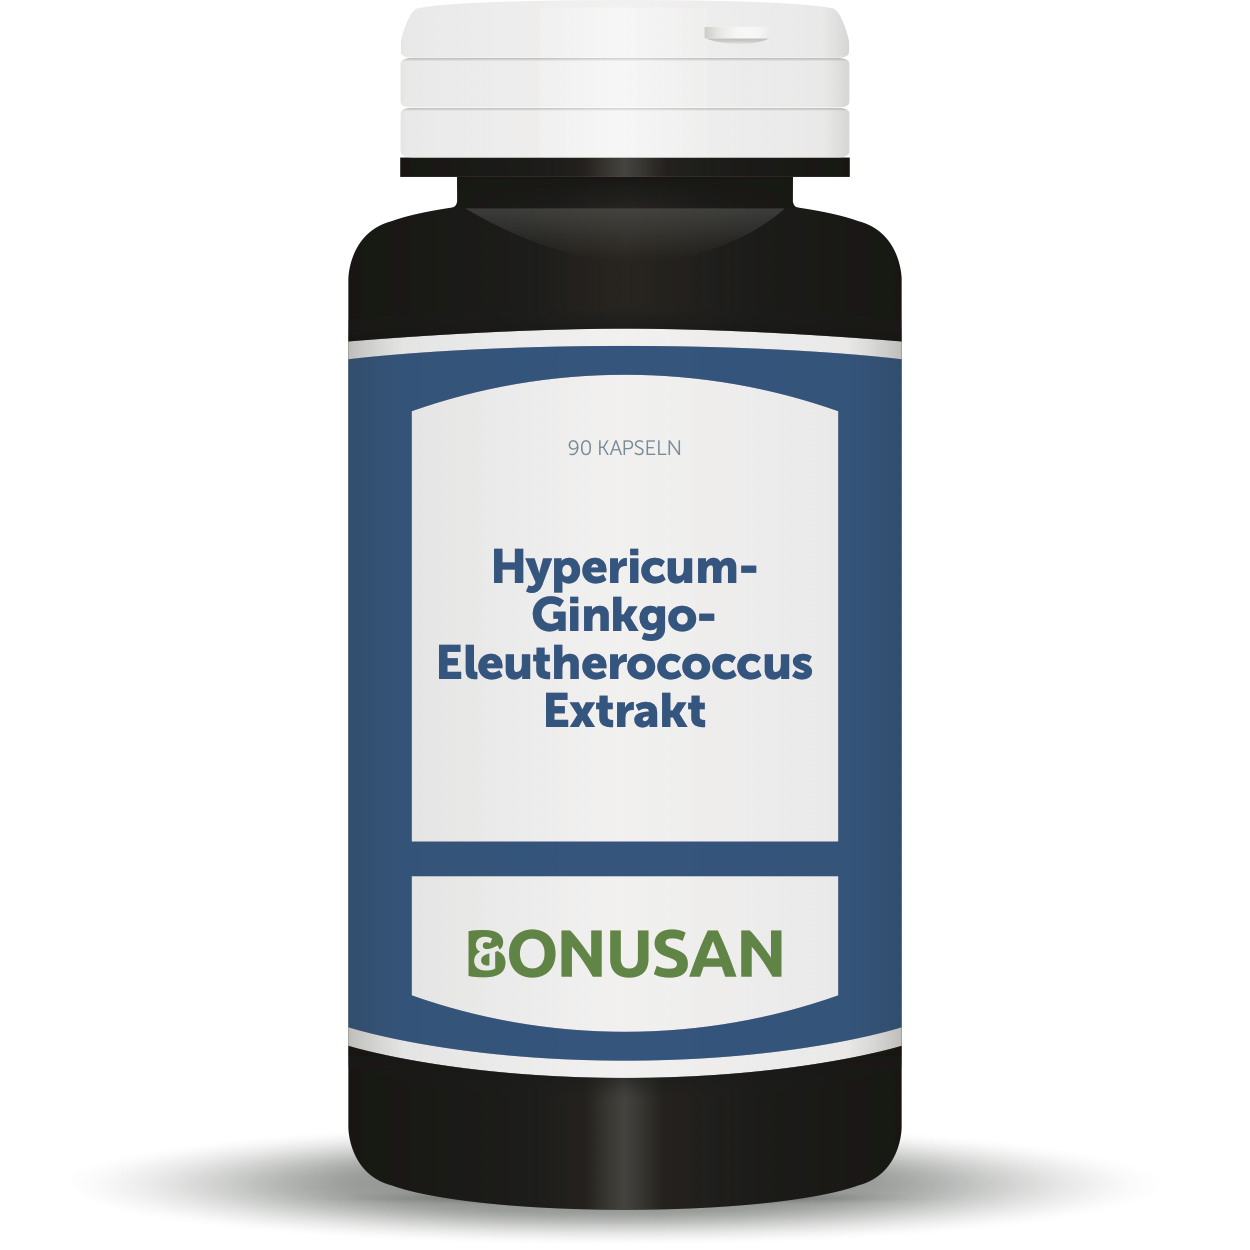 Hypericum-Ginkgo-Eleutherococcus Extrakt